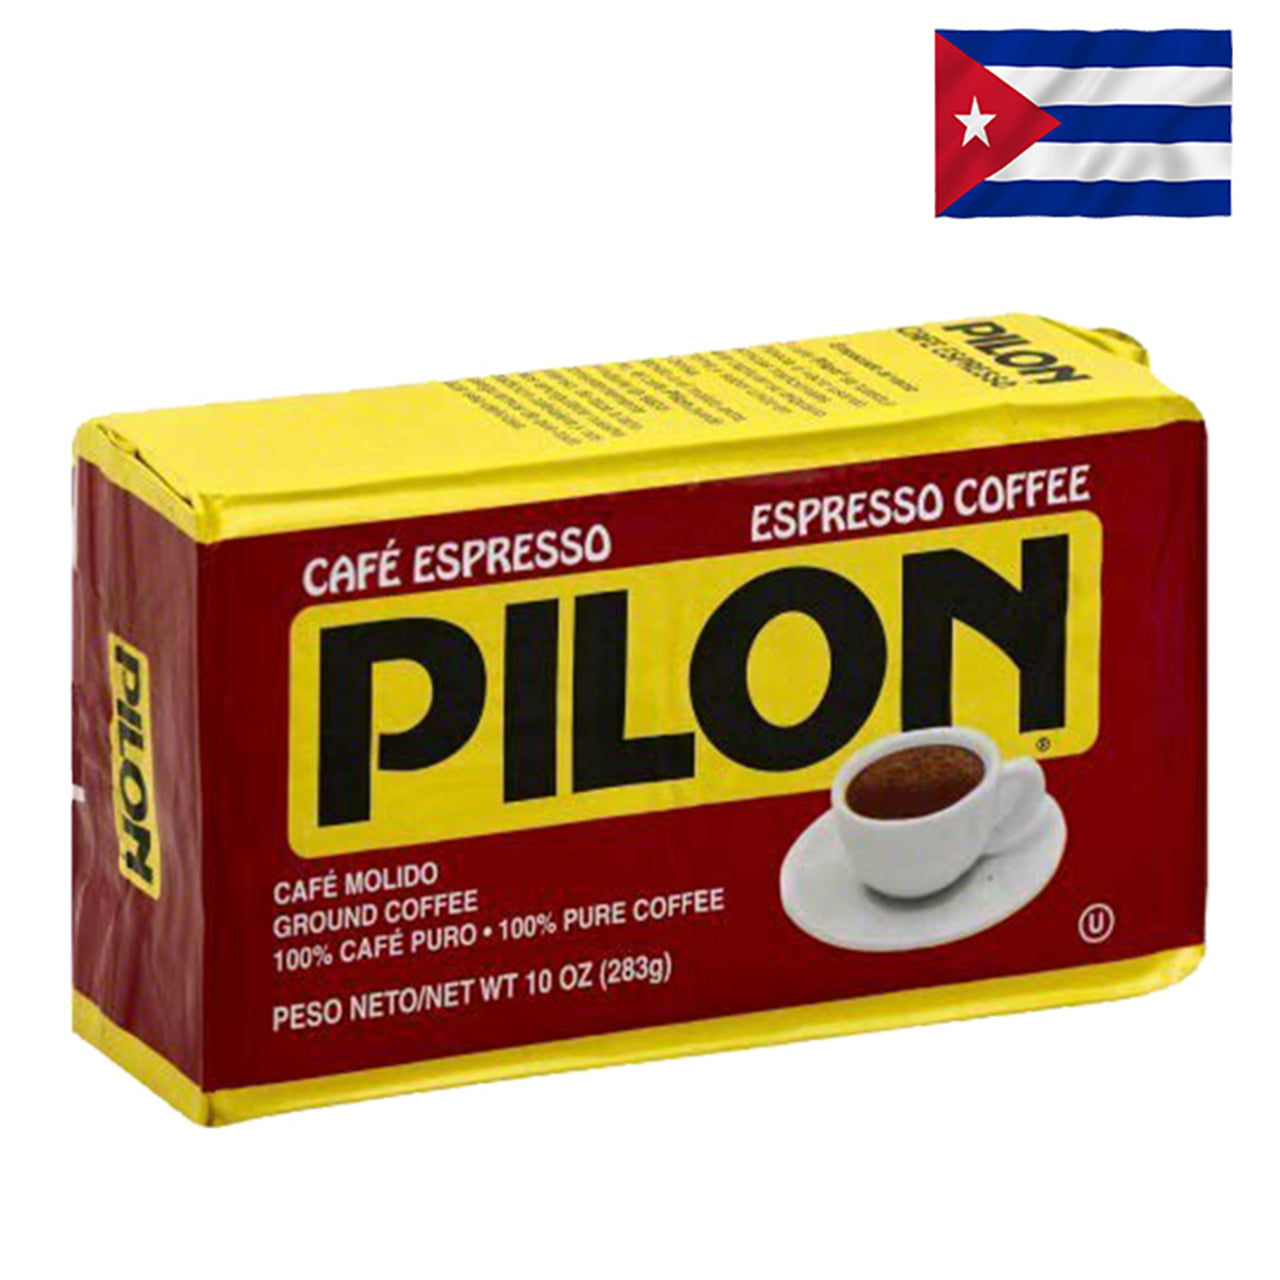 CUBAN PILON COFFEE Espresso Ground Pack of 10 Oz